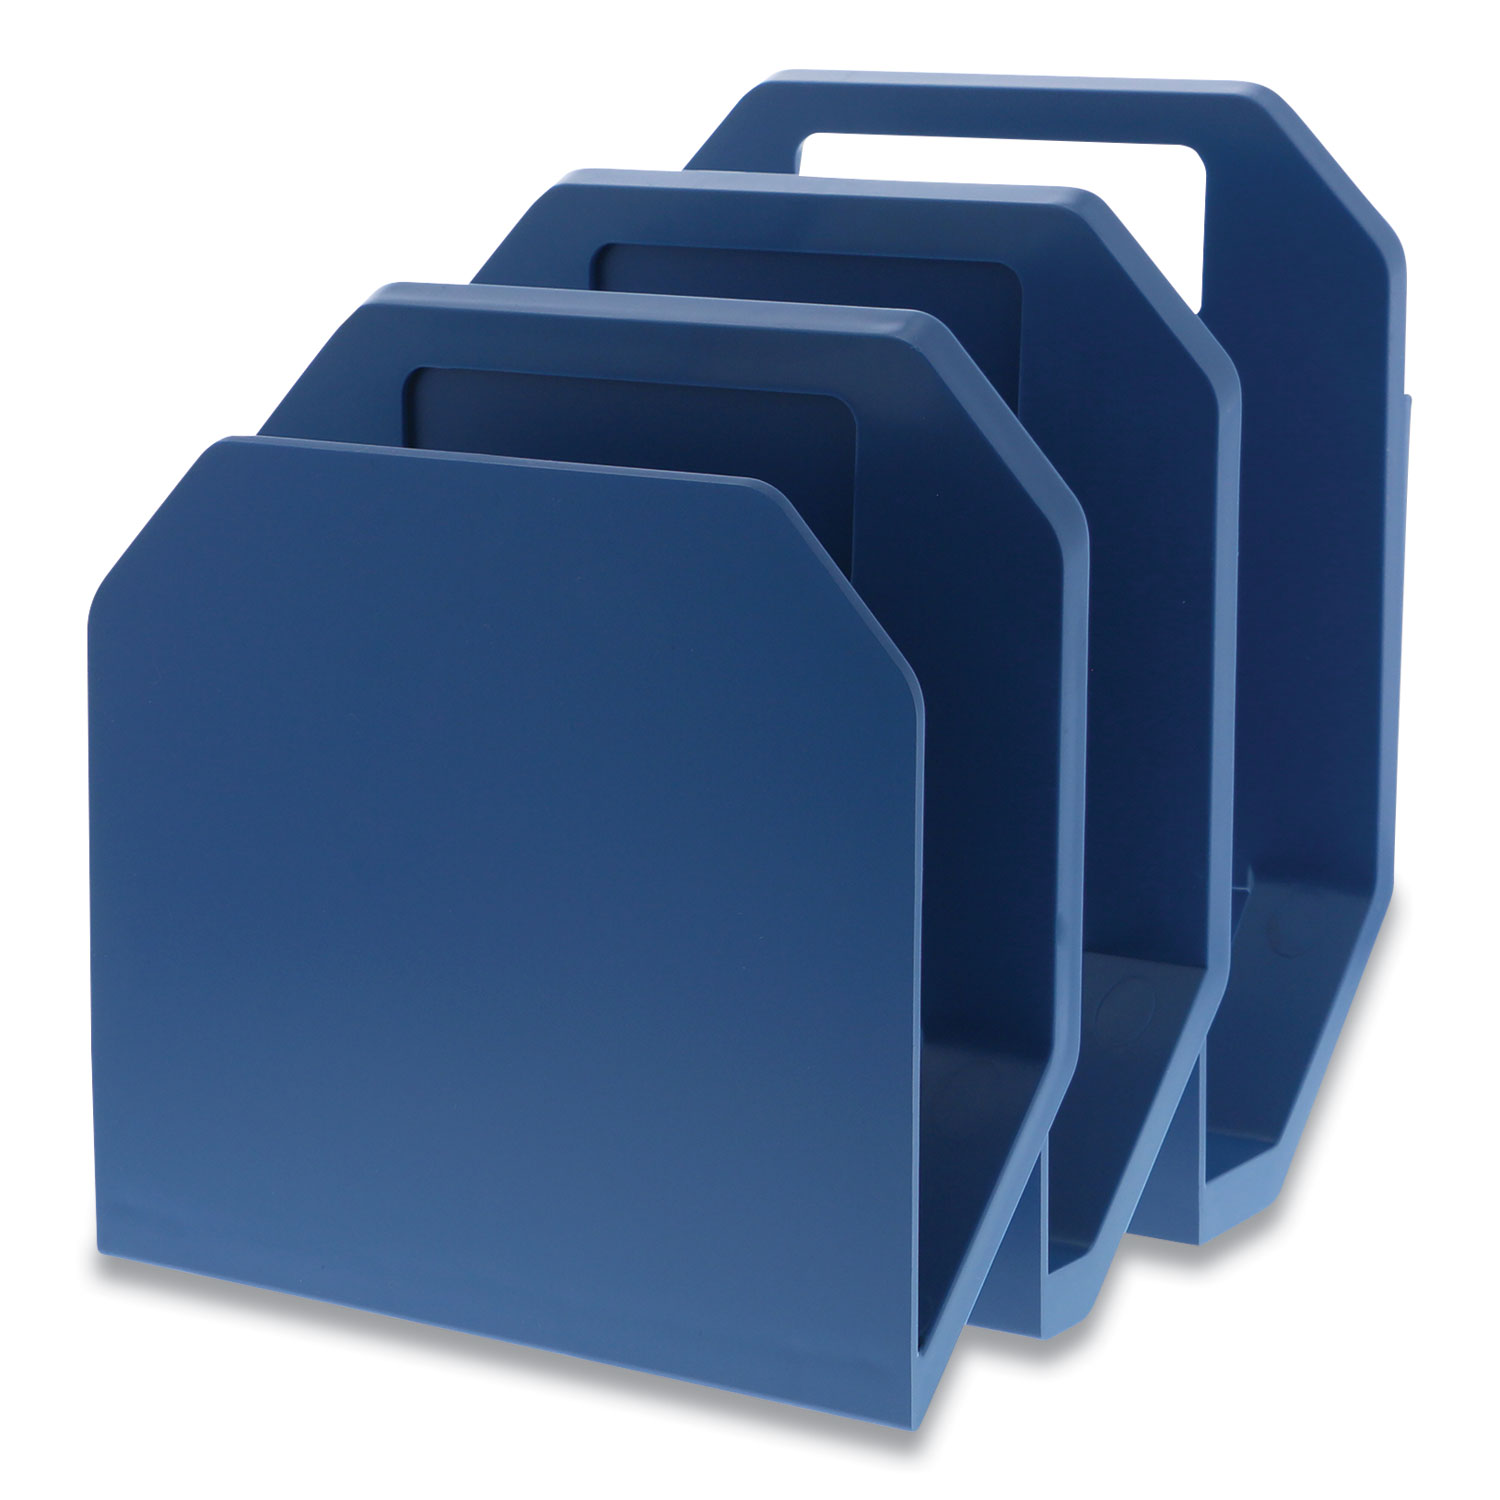  Bostitch KT-3FOLDER-BLUE Konnect File Organizer, 3 Sections, Letter Size Files, 7.25 x 4 x 9.25, Blue (BOS24339998) 